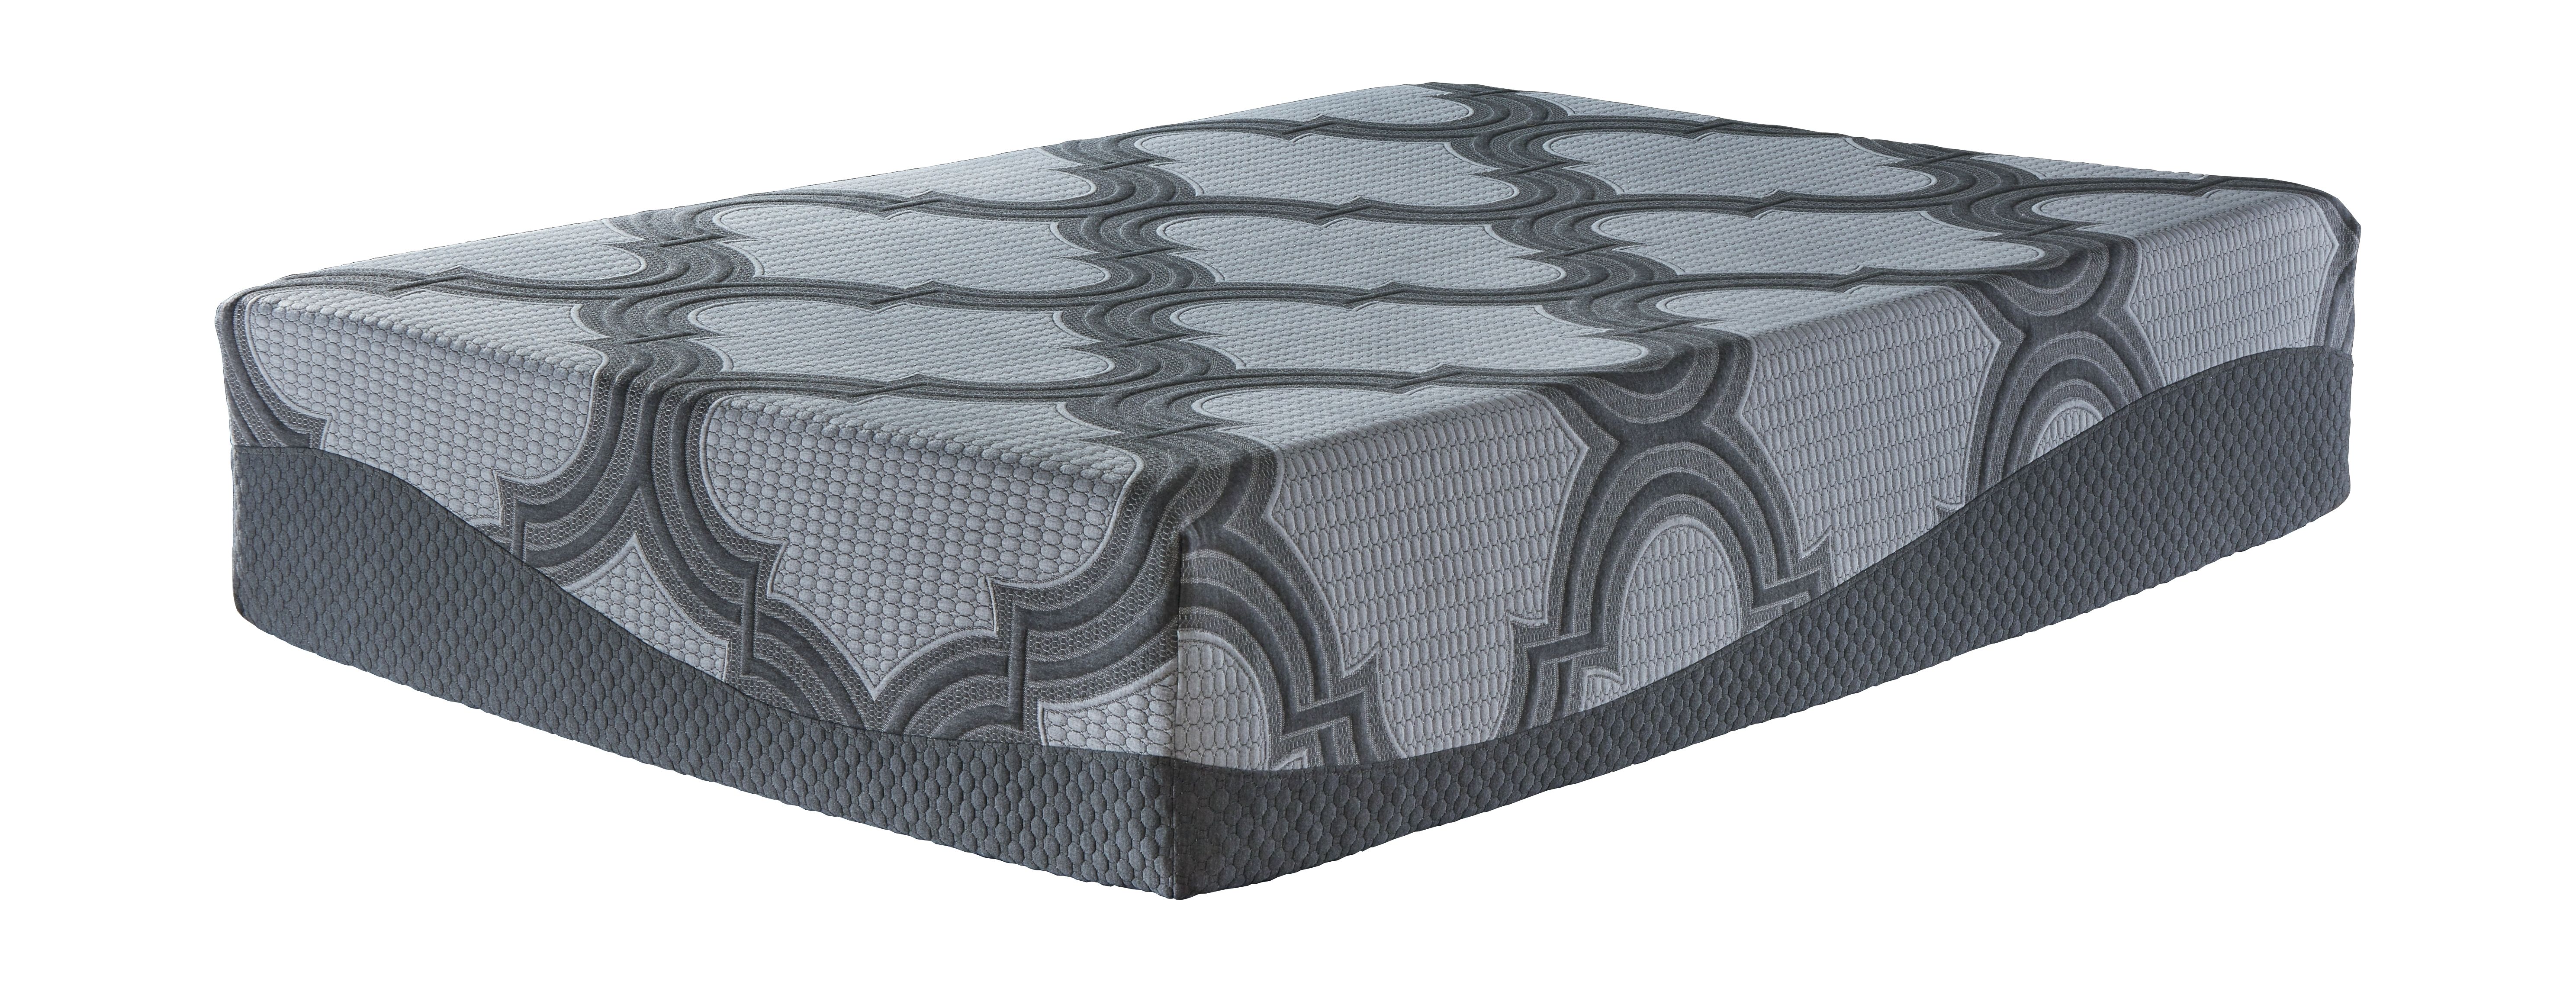 14 inch ashley hybrid gray king mattress